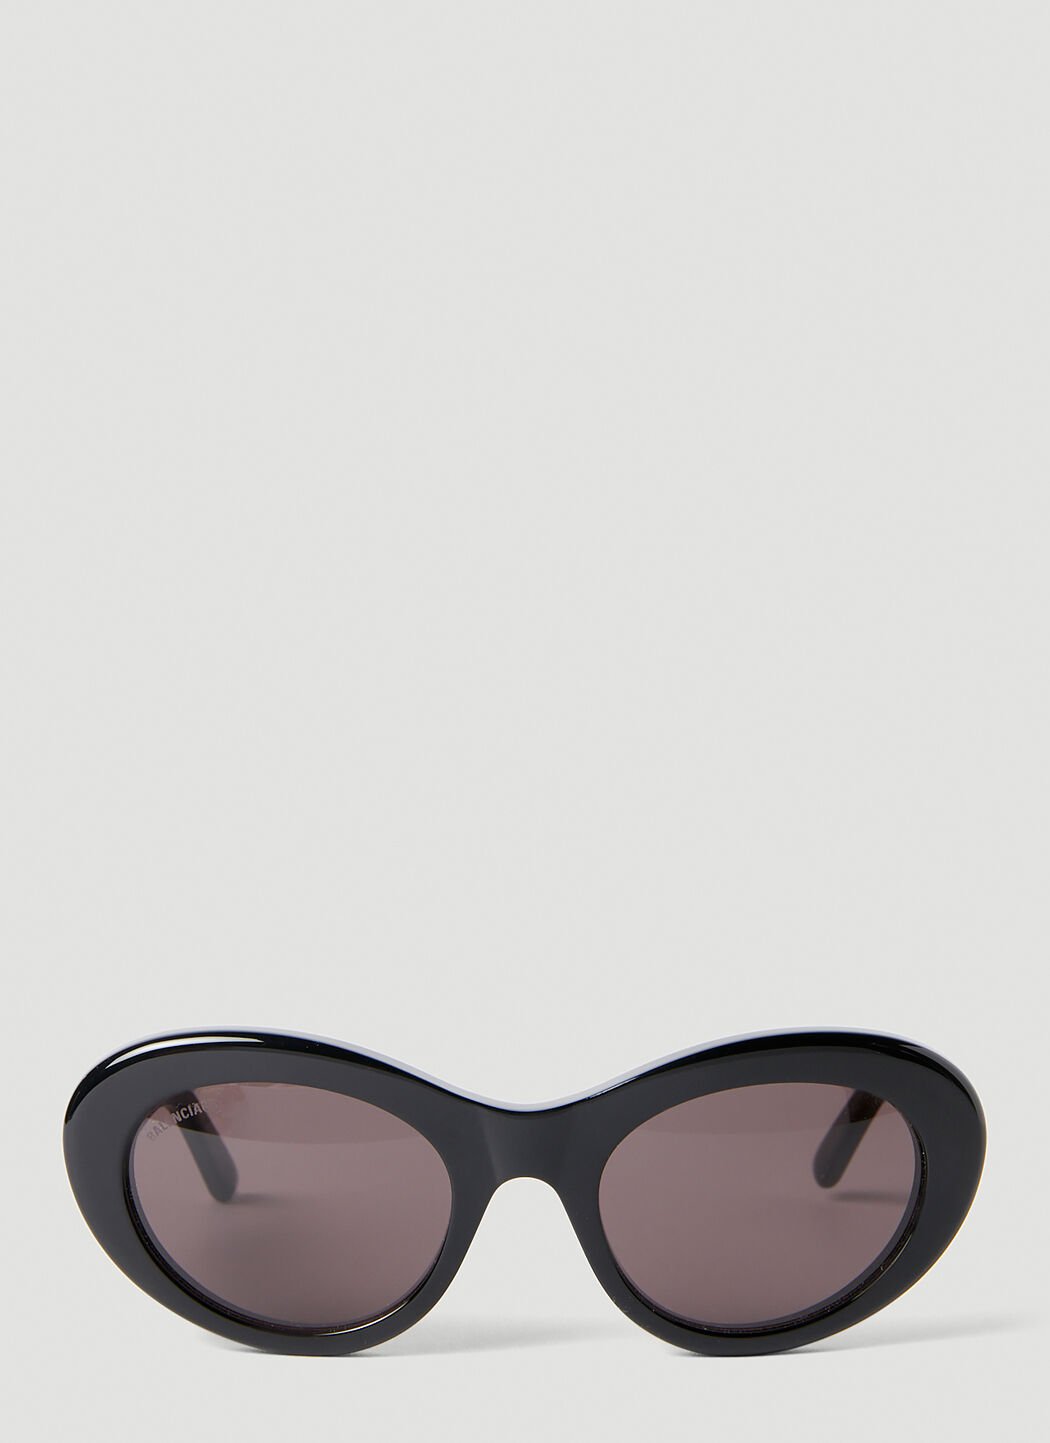 Balenciaga Monaco Round Sunglasses Black bcs0253001